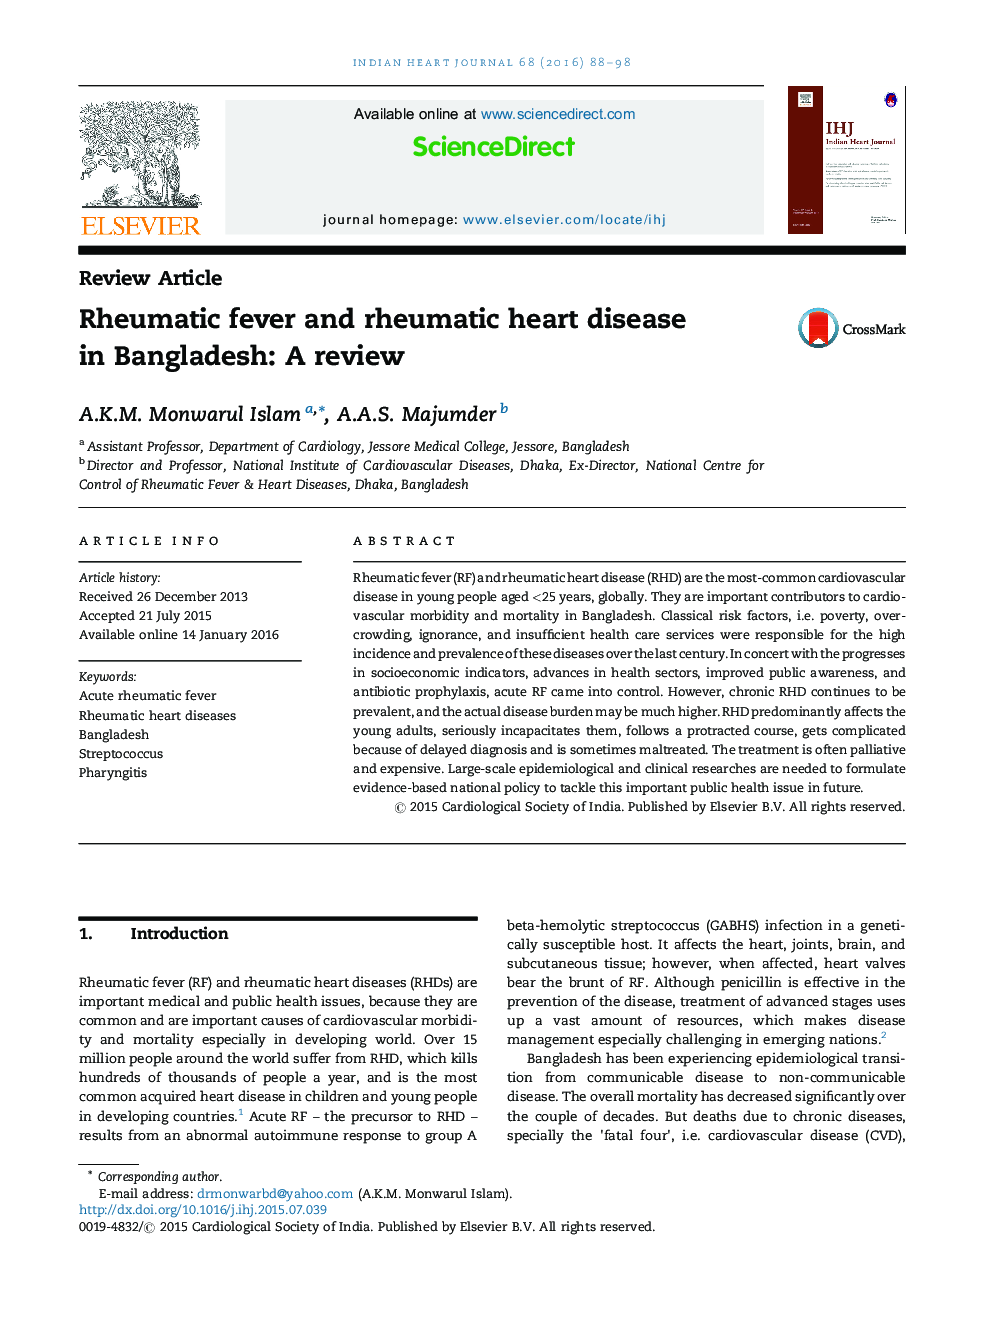 Rheumatic fever and rheumatic heart disease in Bangladesh: A review